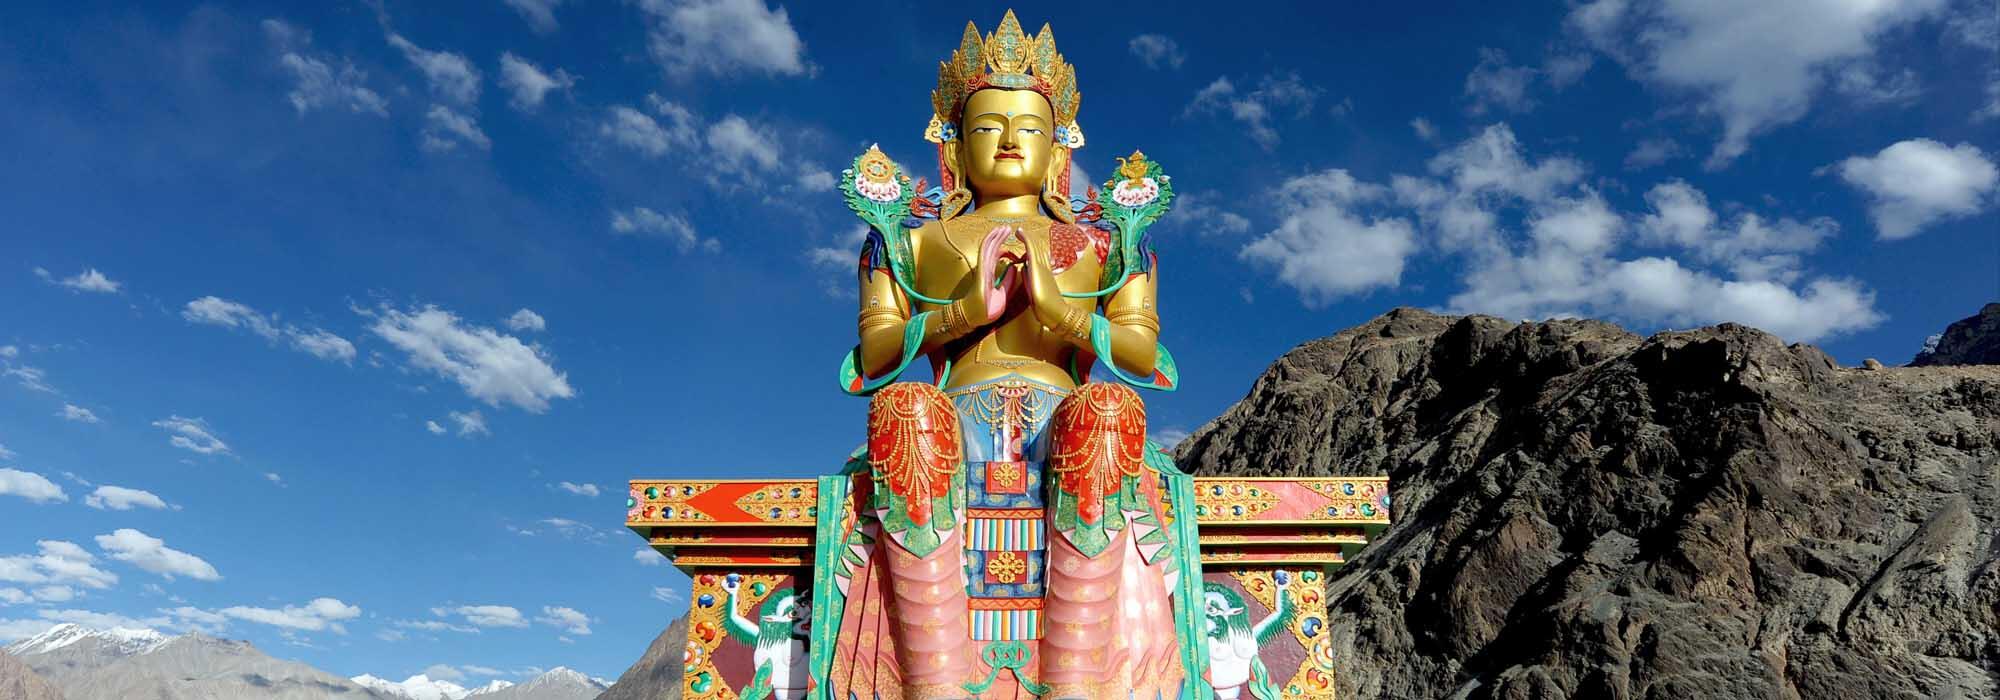 Maitreya Buddha statue at Nubra Valley, Leh